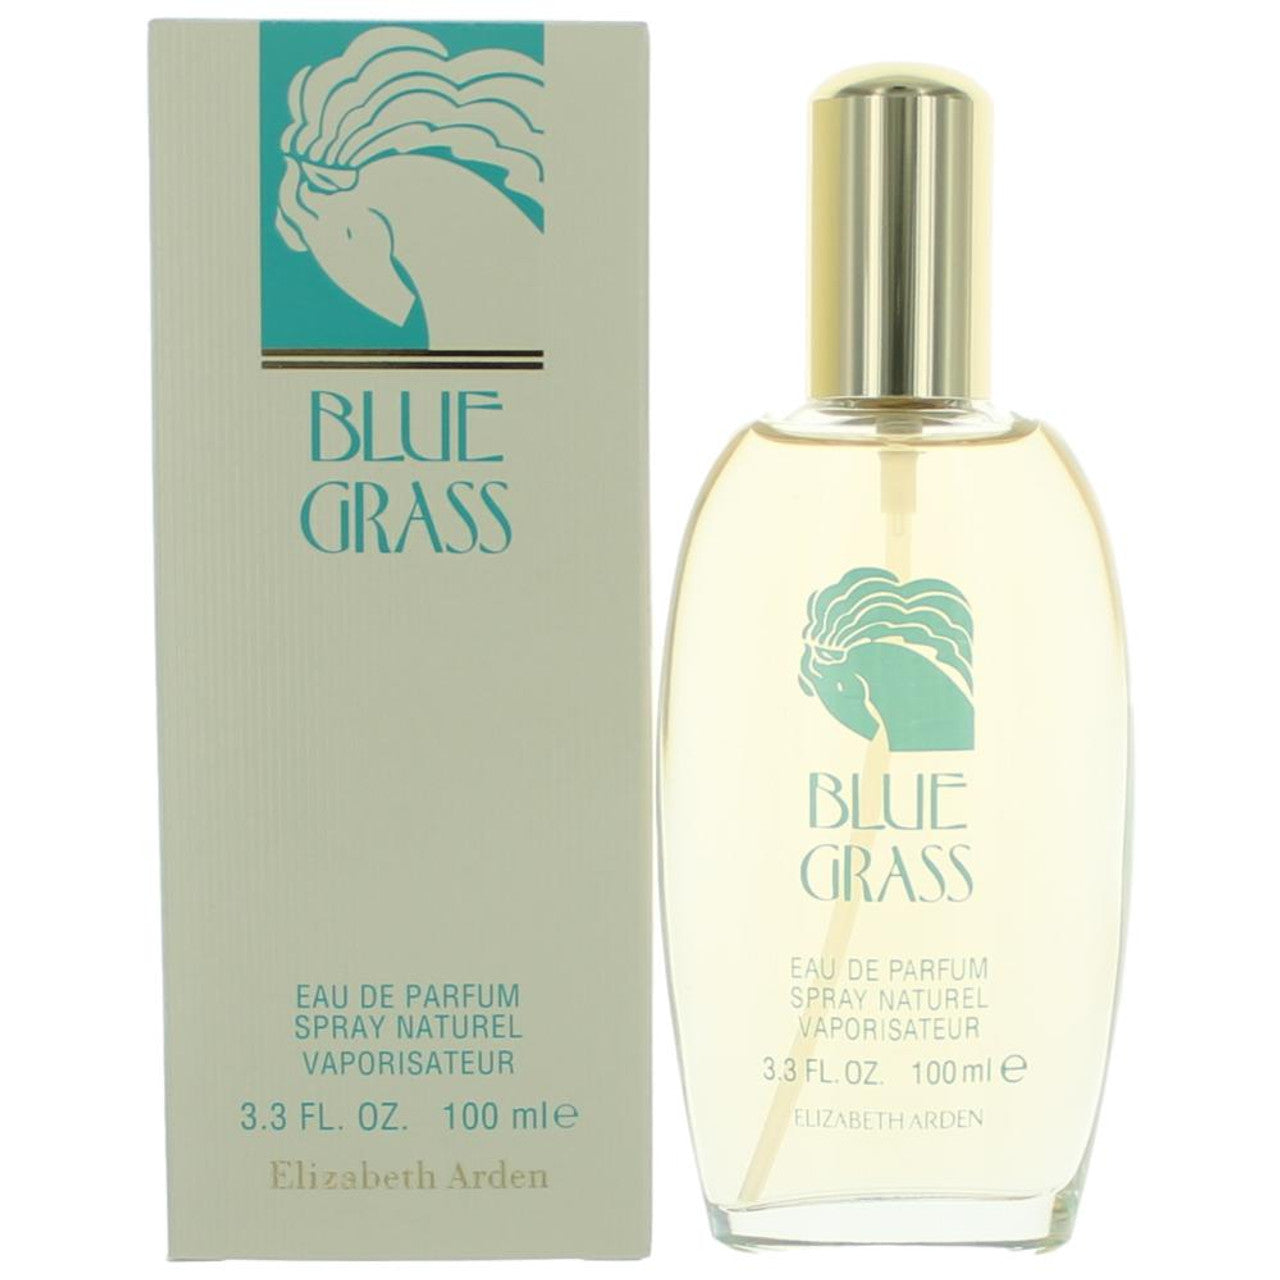 3.3 oz bottle of Blue Grass perfume by Elizabeth Arden